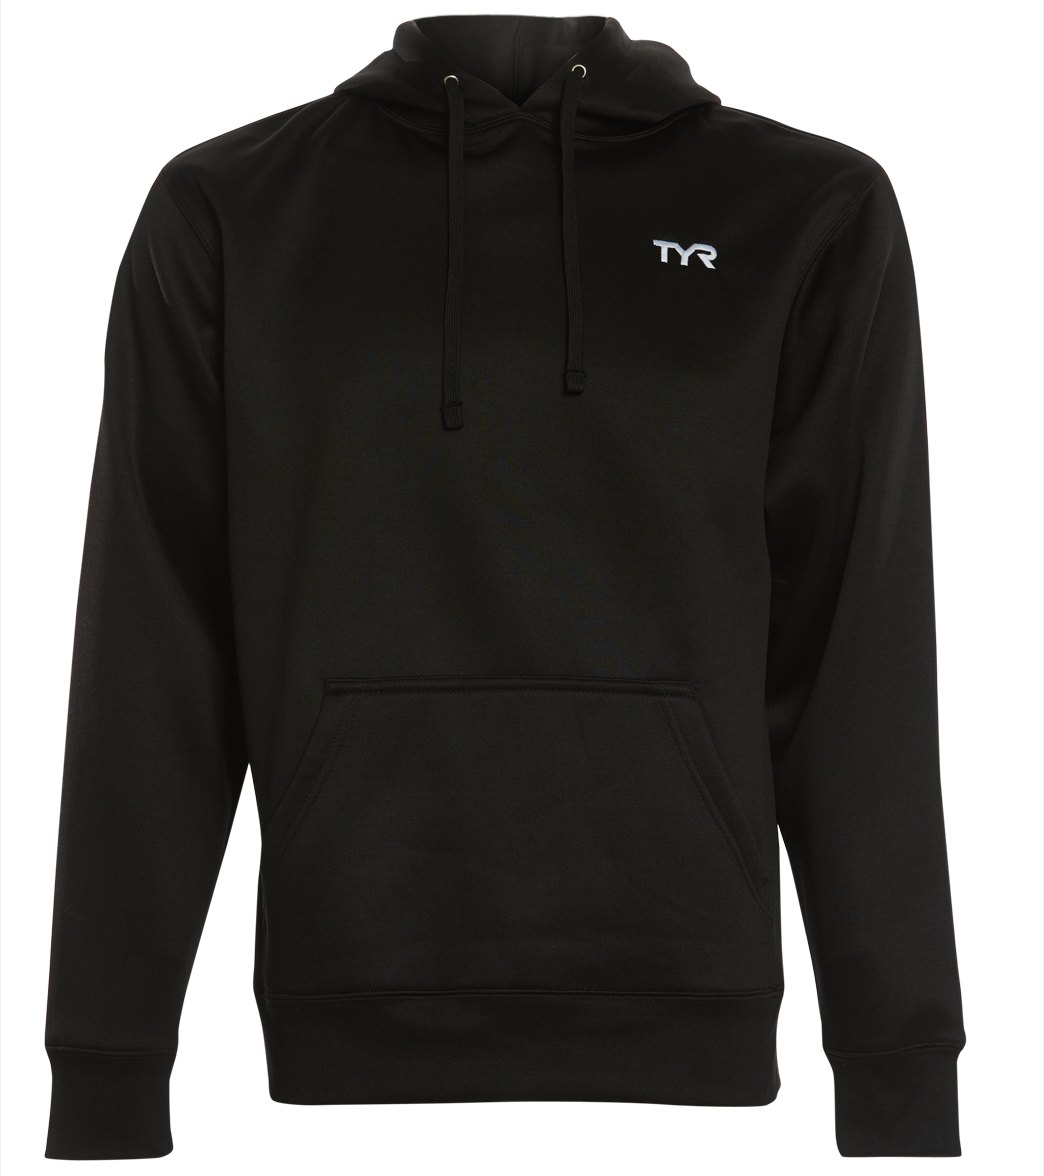 TYR Men's Alliance Pullover Hoodie - Black Xxl Cotton/Polyester - Swimoutlet.com